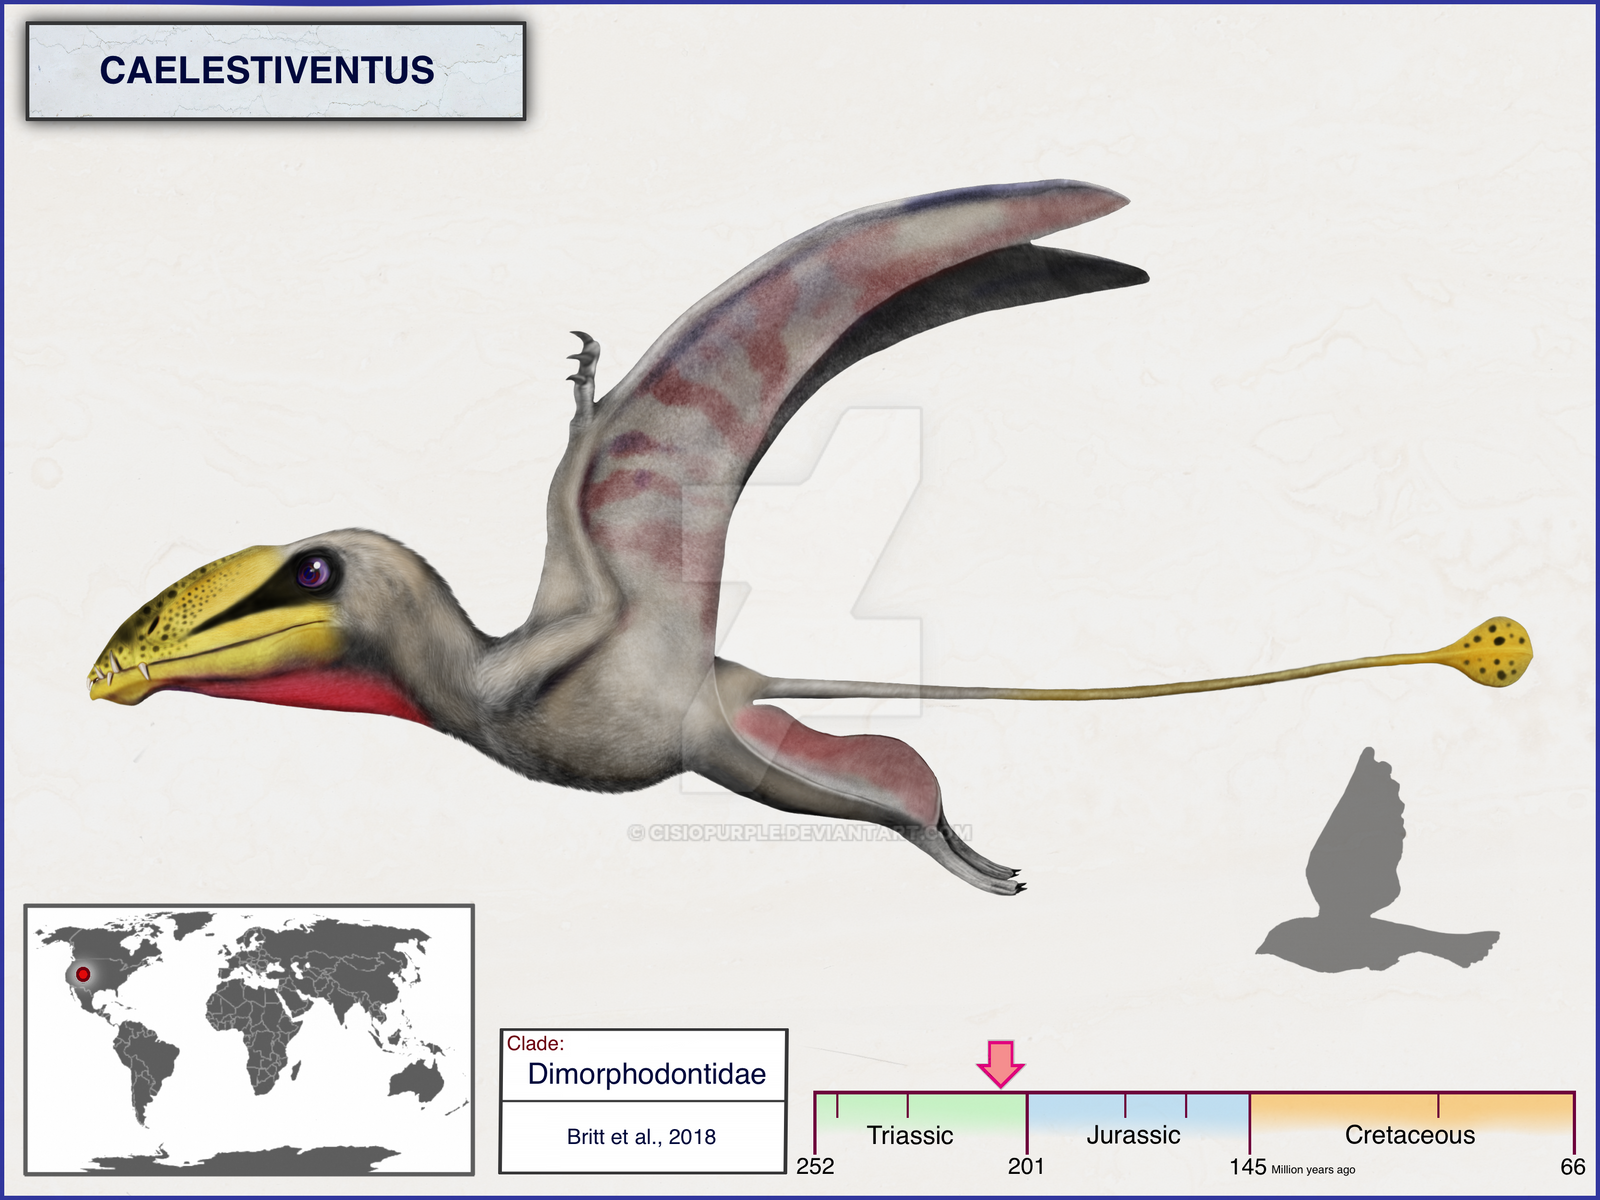 Aerodactylus - Wikipedia